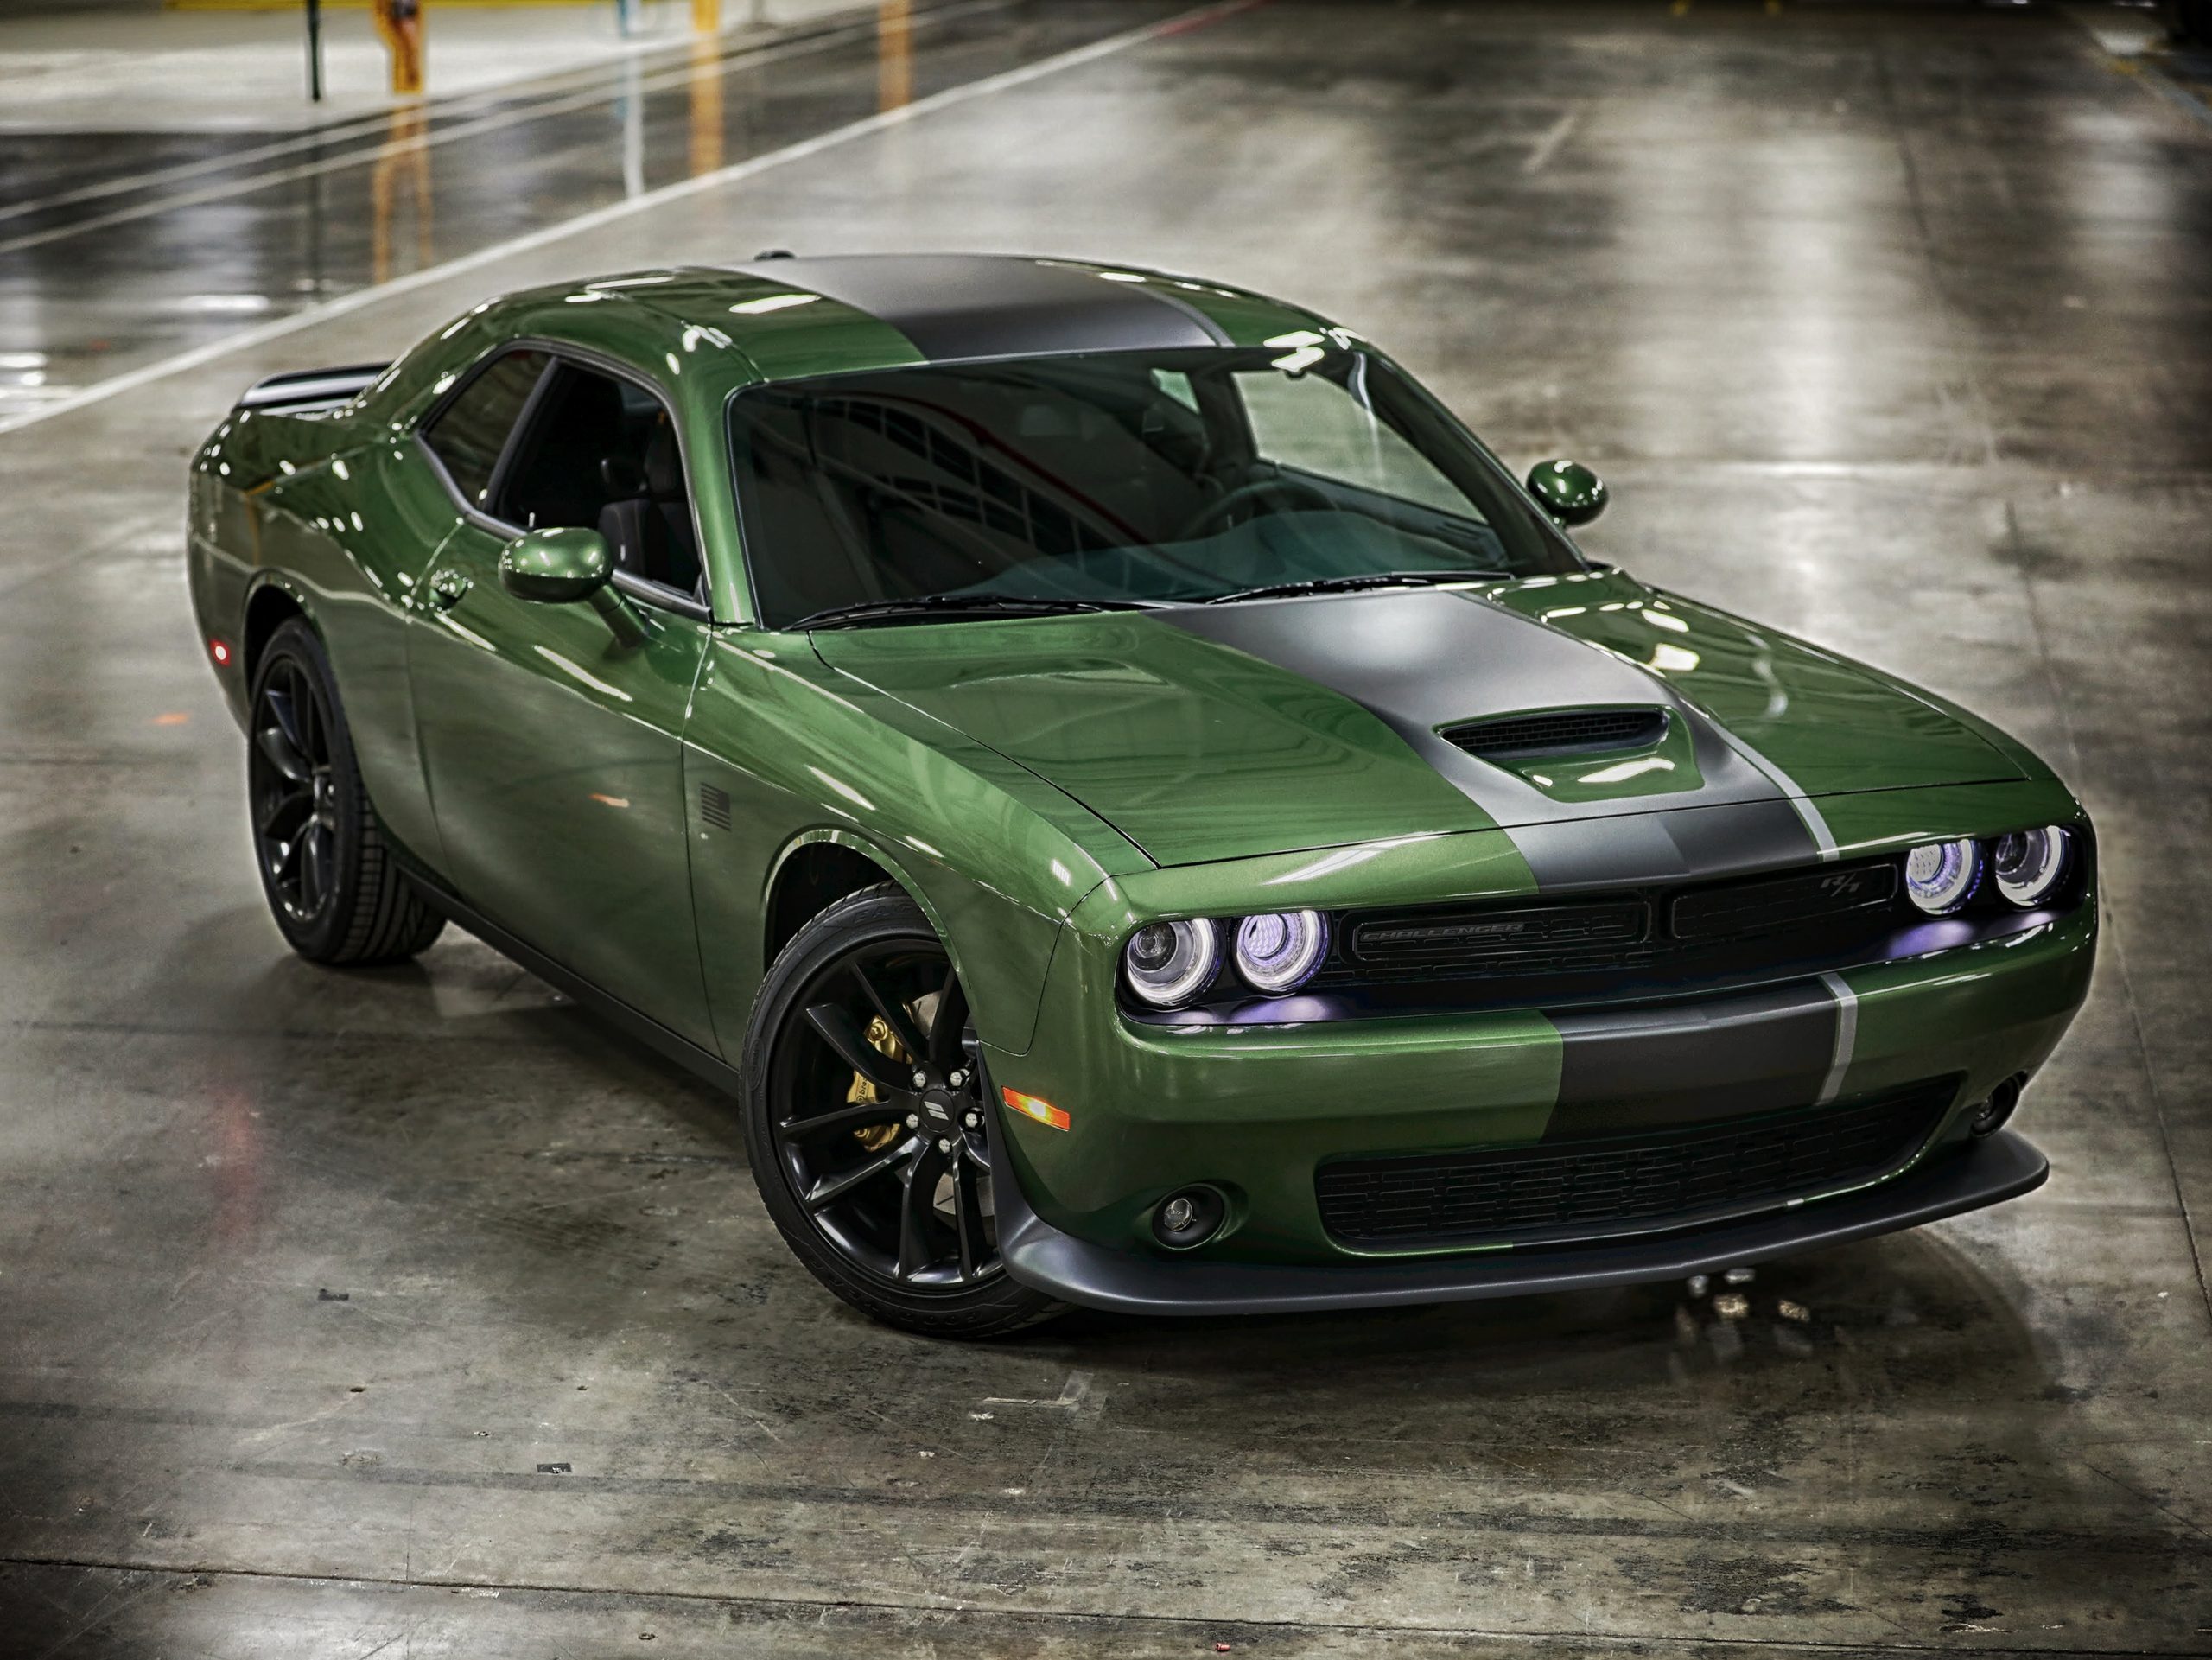 2020-Dodge-Challenger-F8-green-scaled.jpg